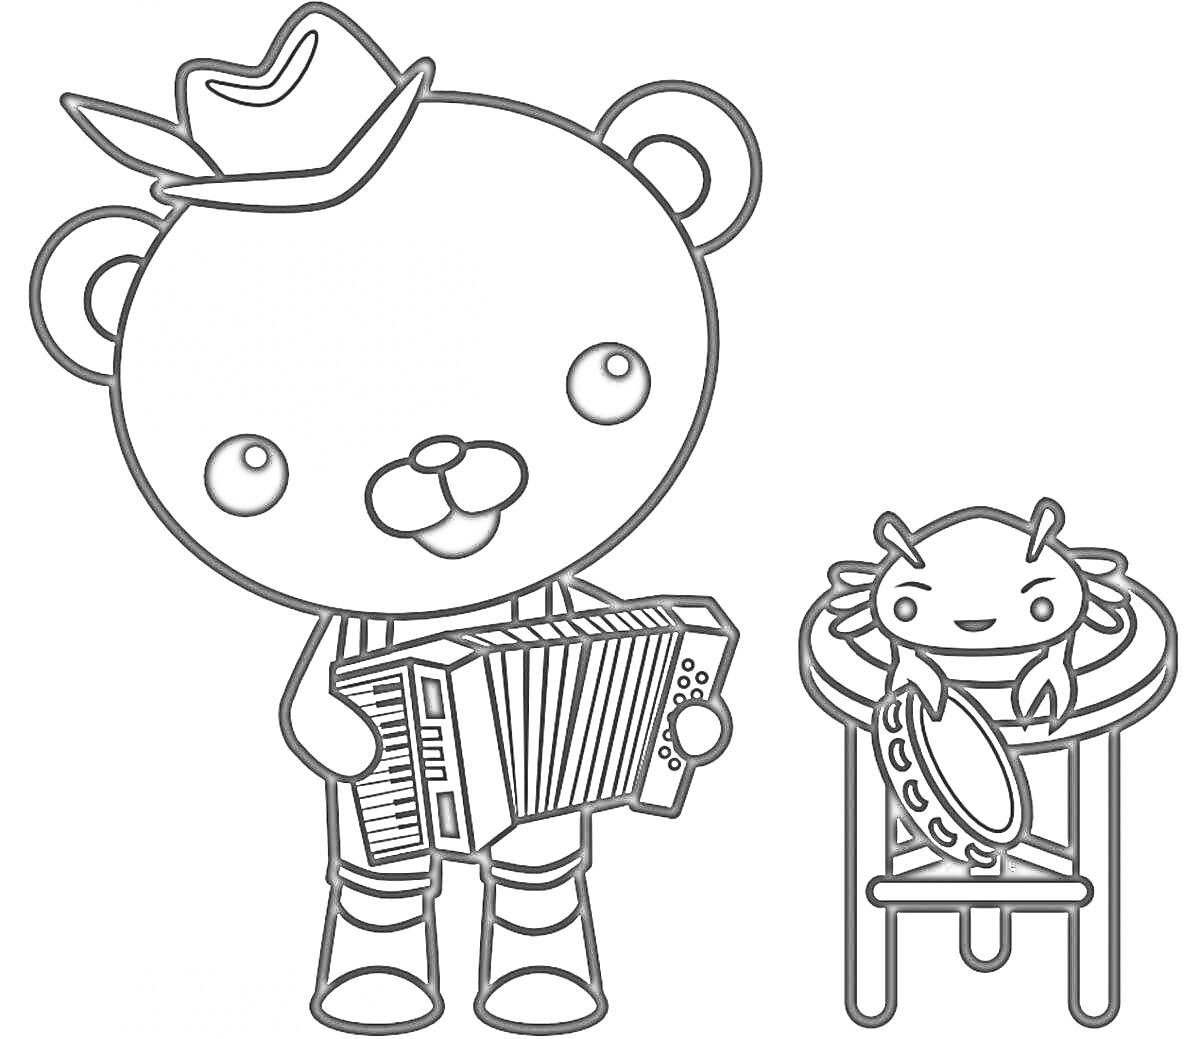 Раскраска Мишка с аккордеоном и медуза с годовым бубна